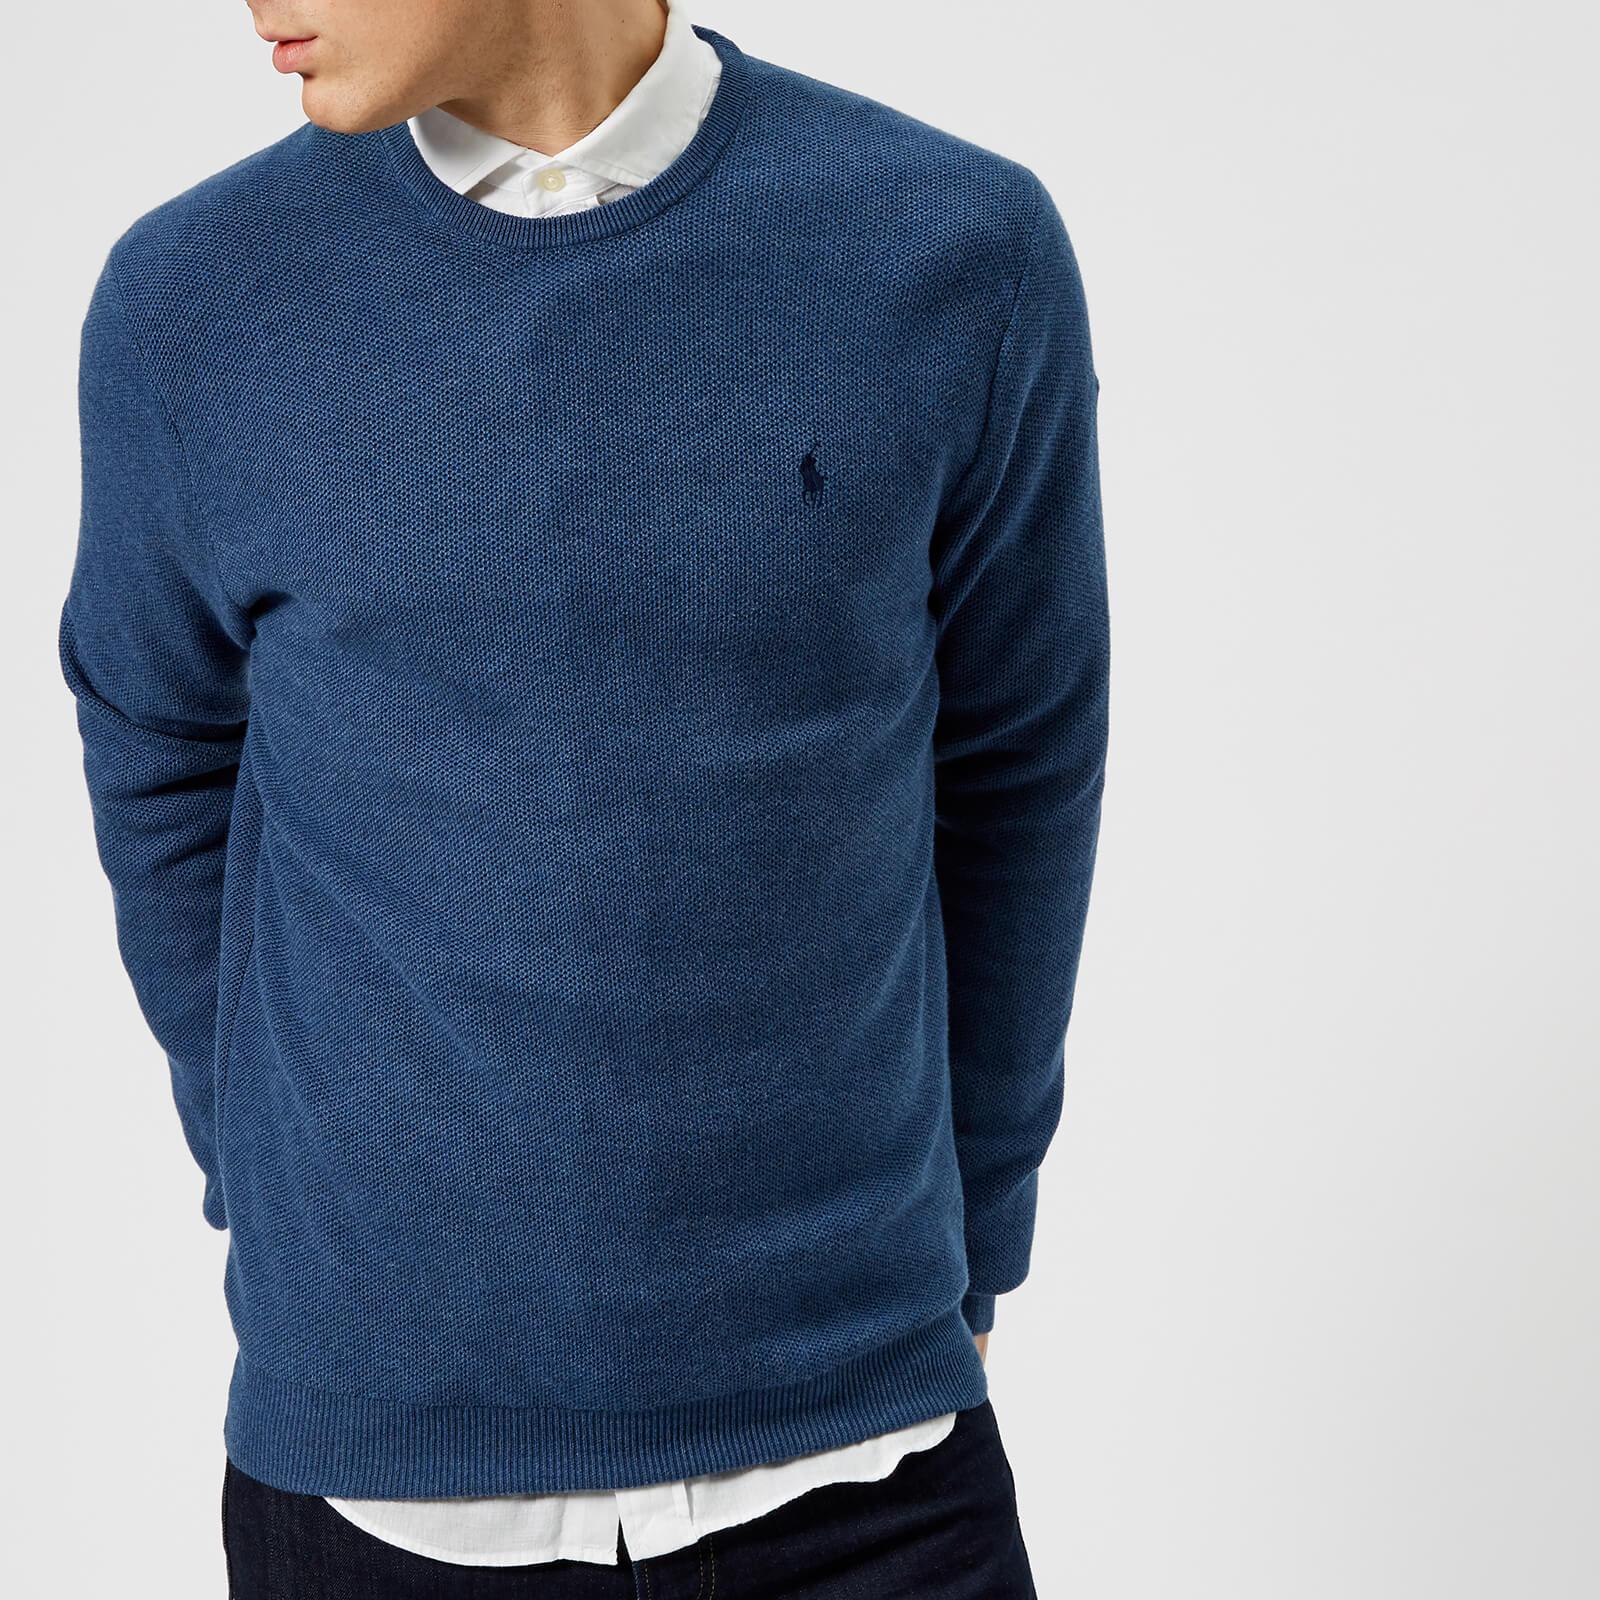 Polo Ralph Lauren Pima Cotton Crew Neck Sweater in Blue for Men - Lyst